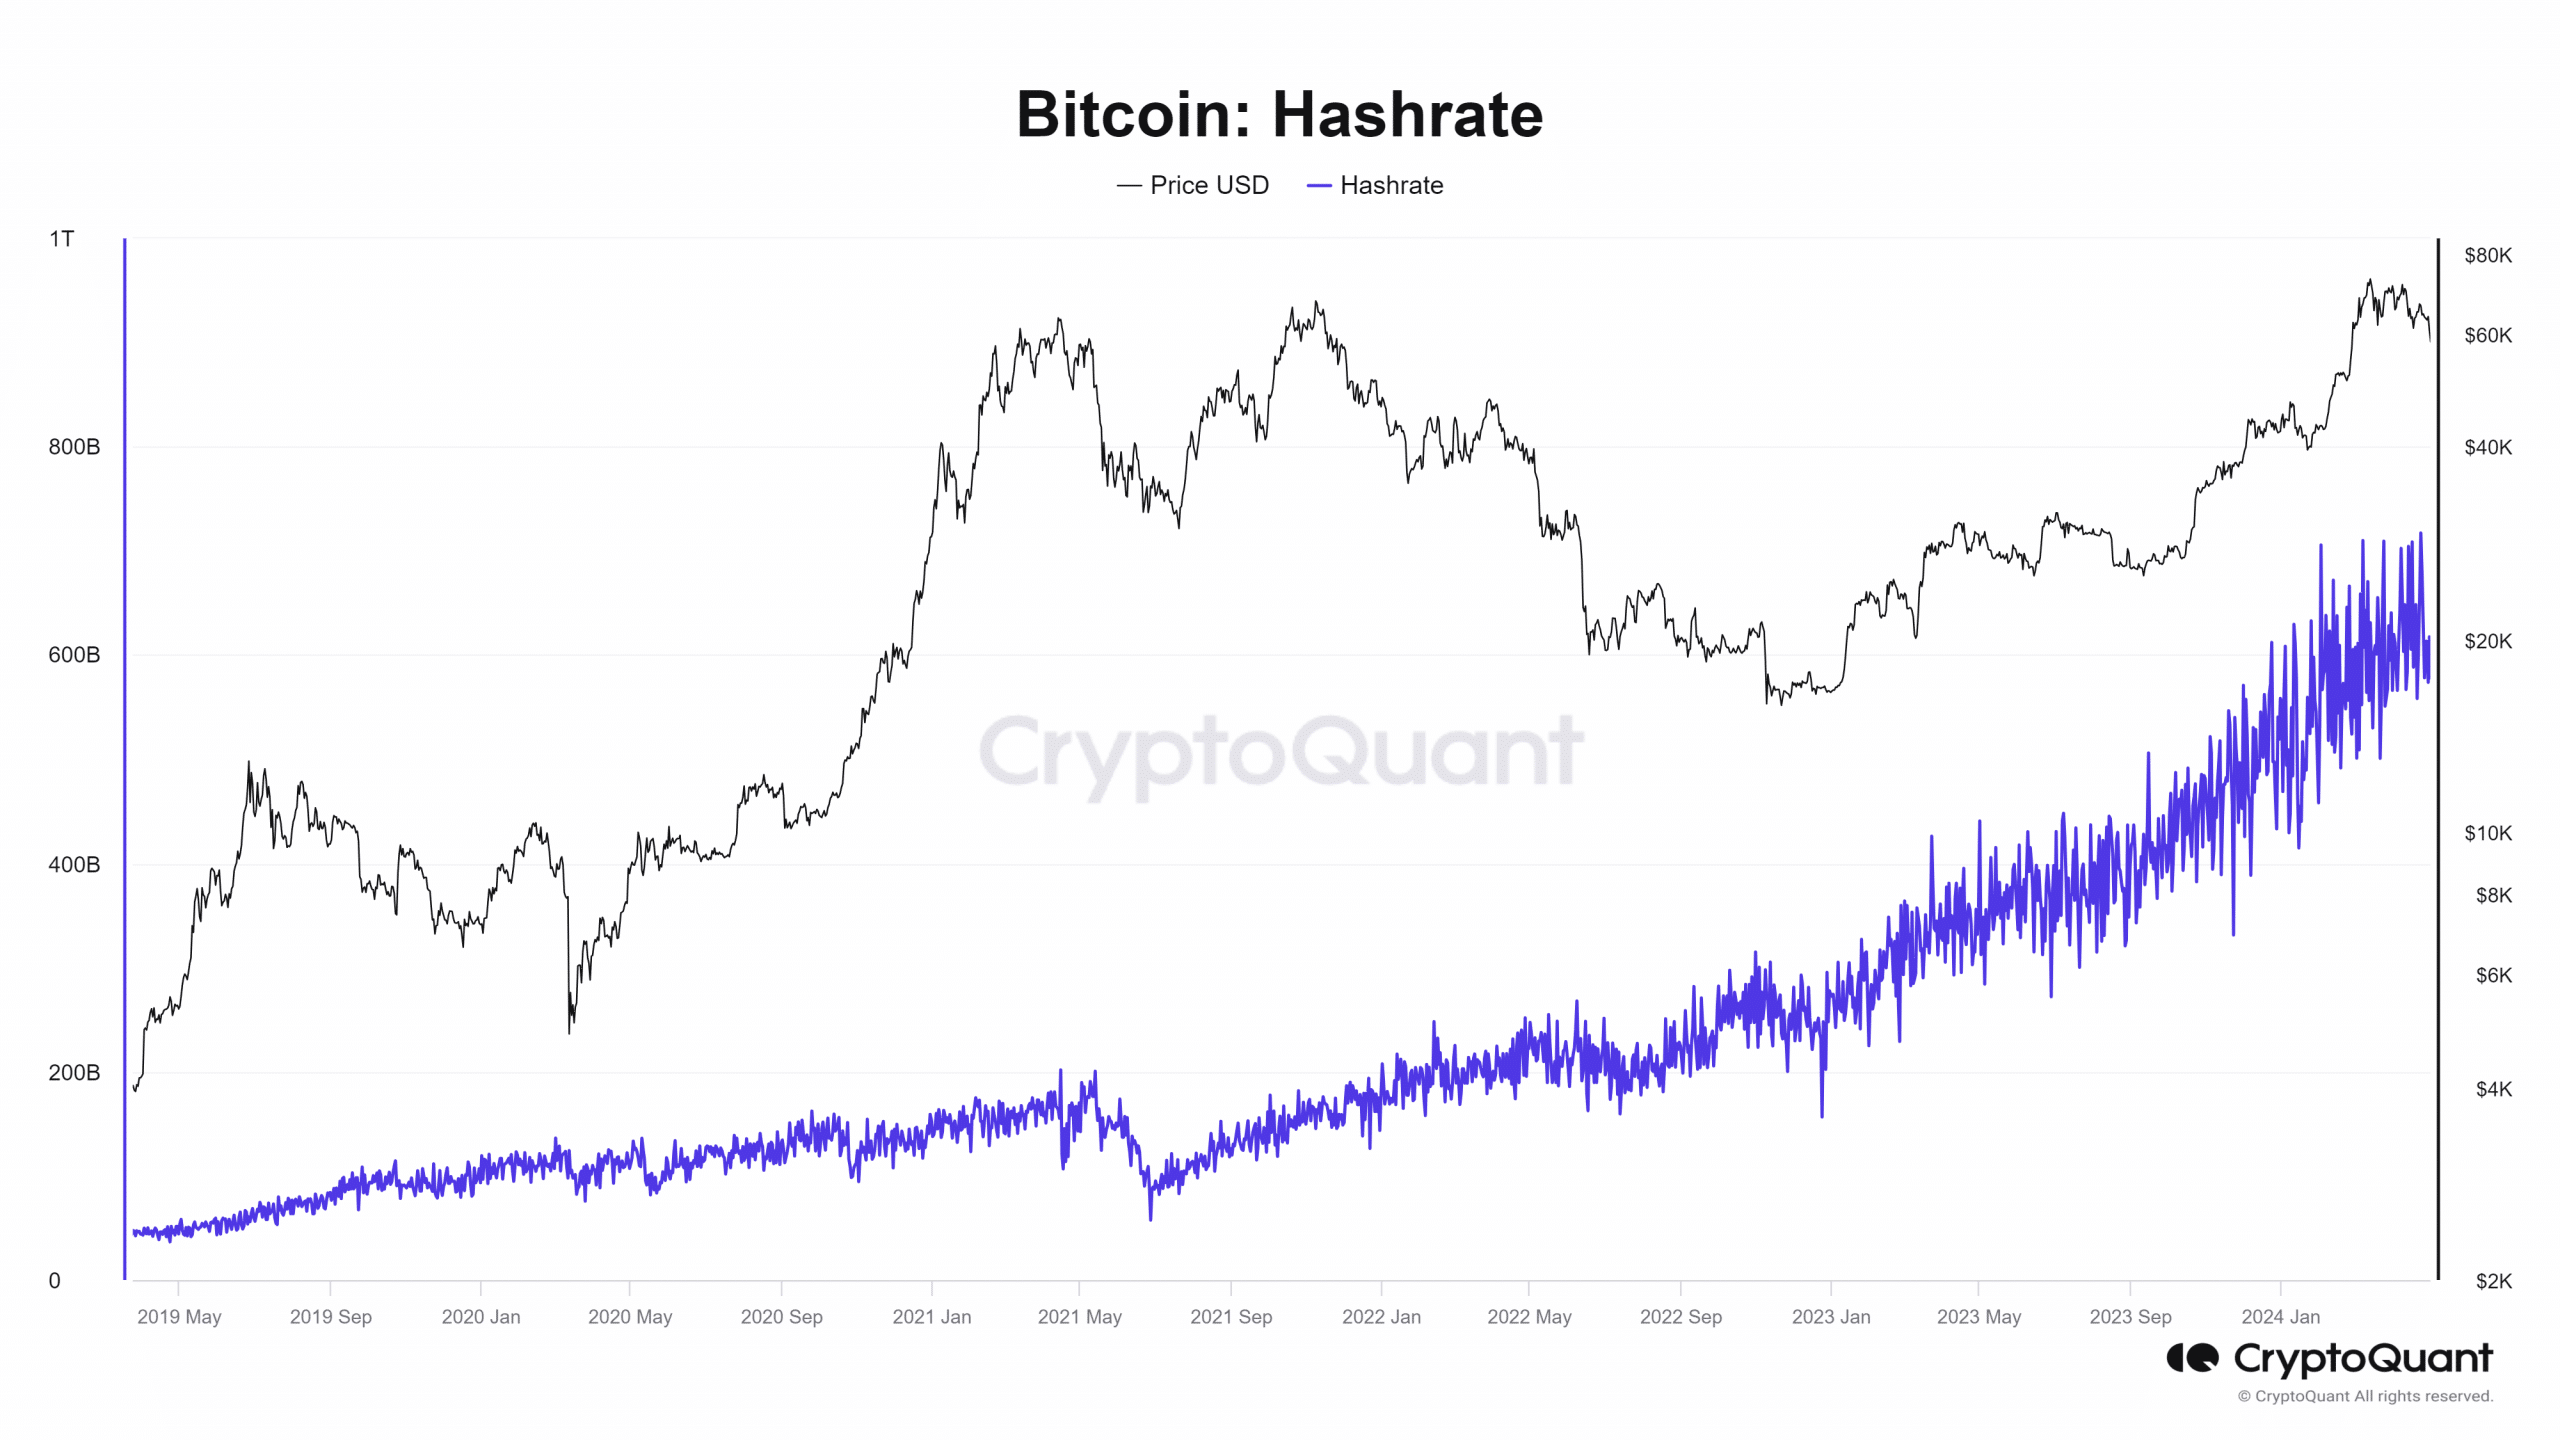 Bitcoin Hash Rate